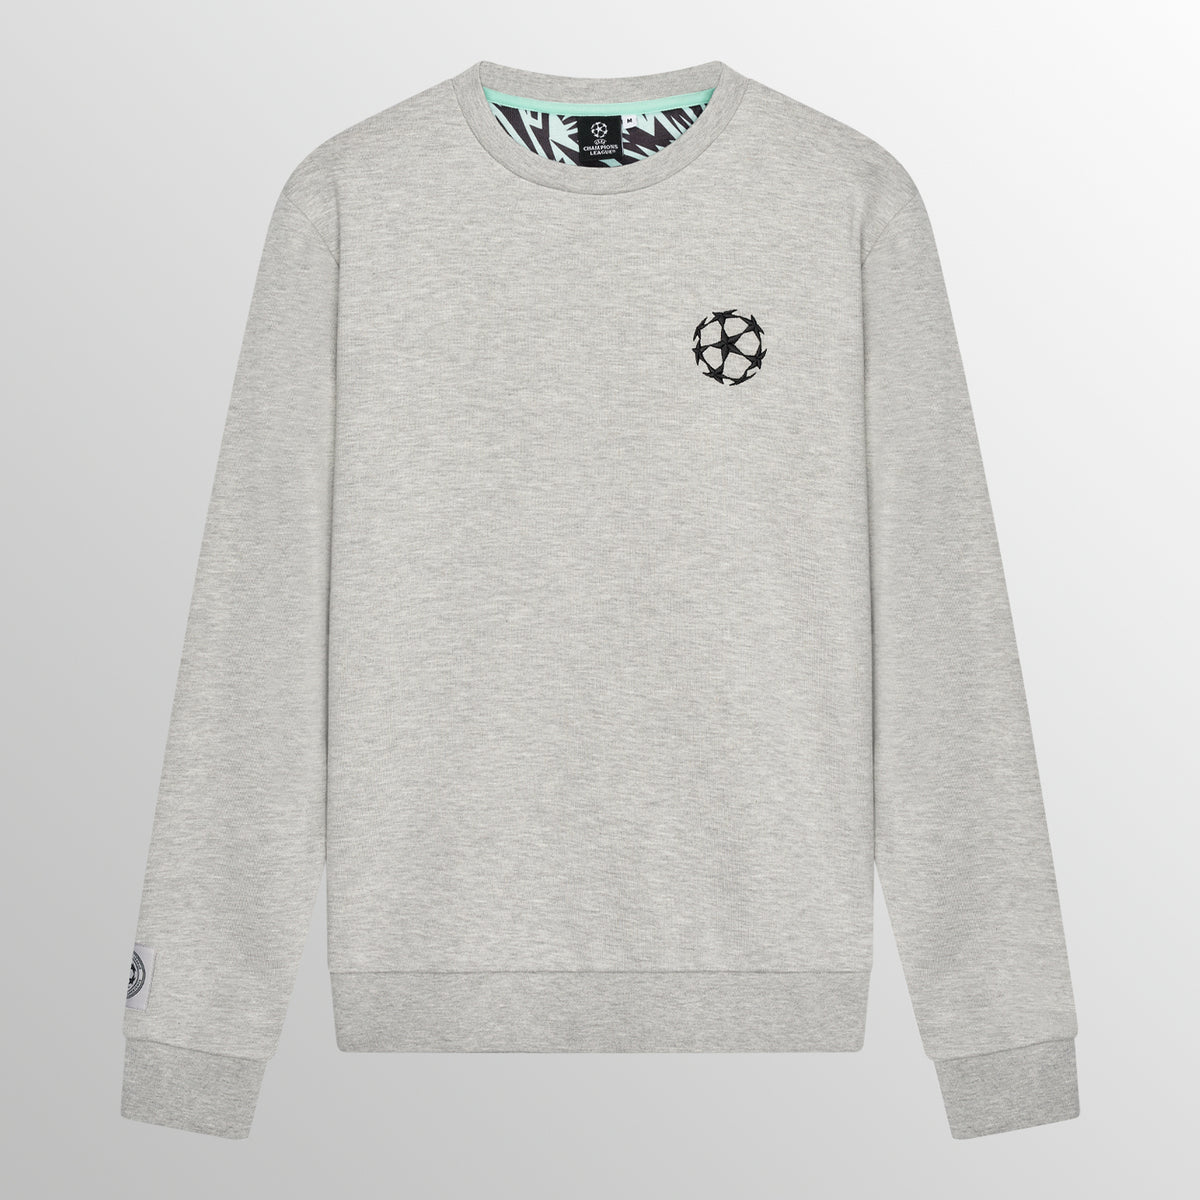 UEFA Champions League Sweatshirt UEFA Club Competitions Online Store